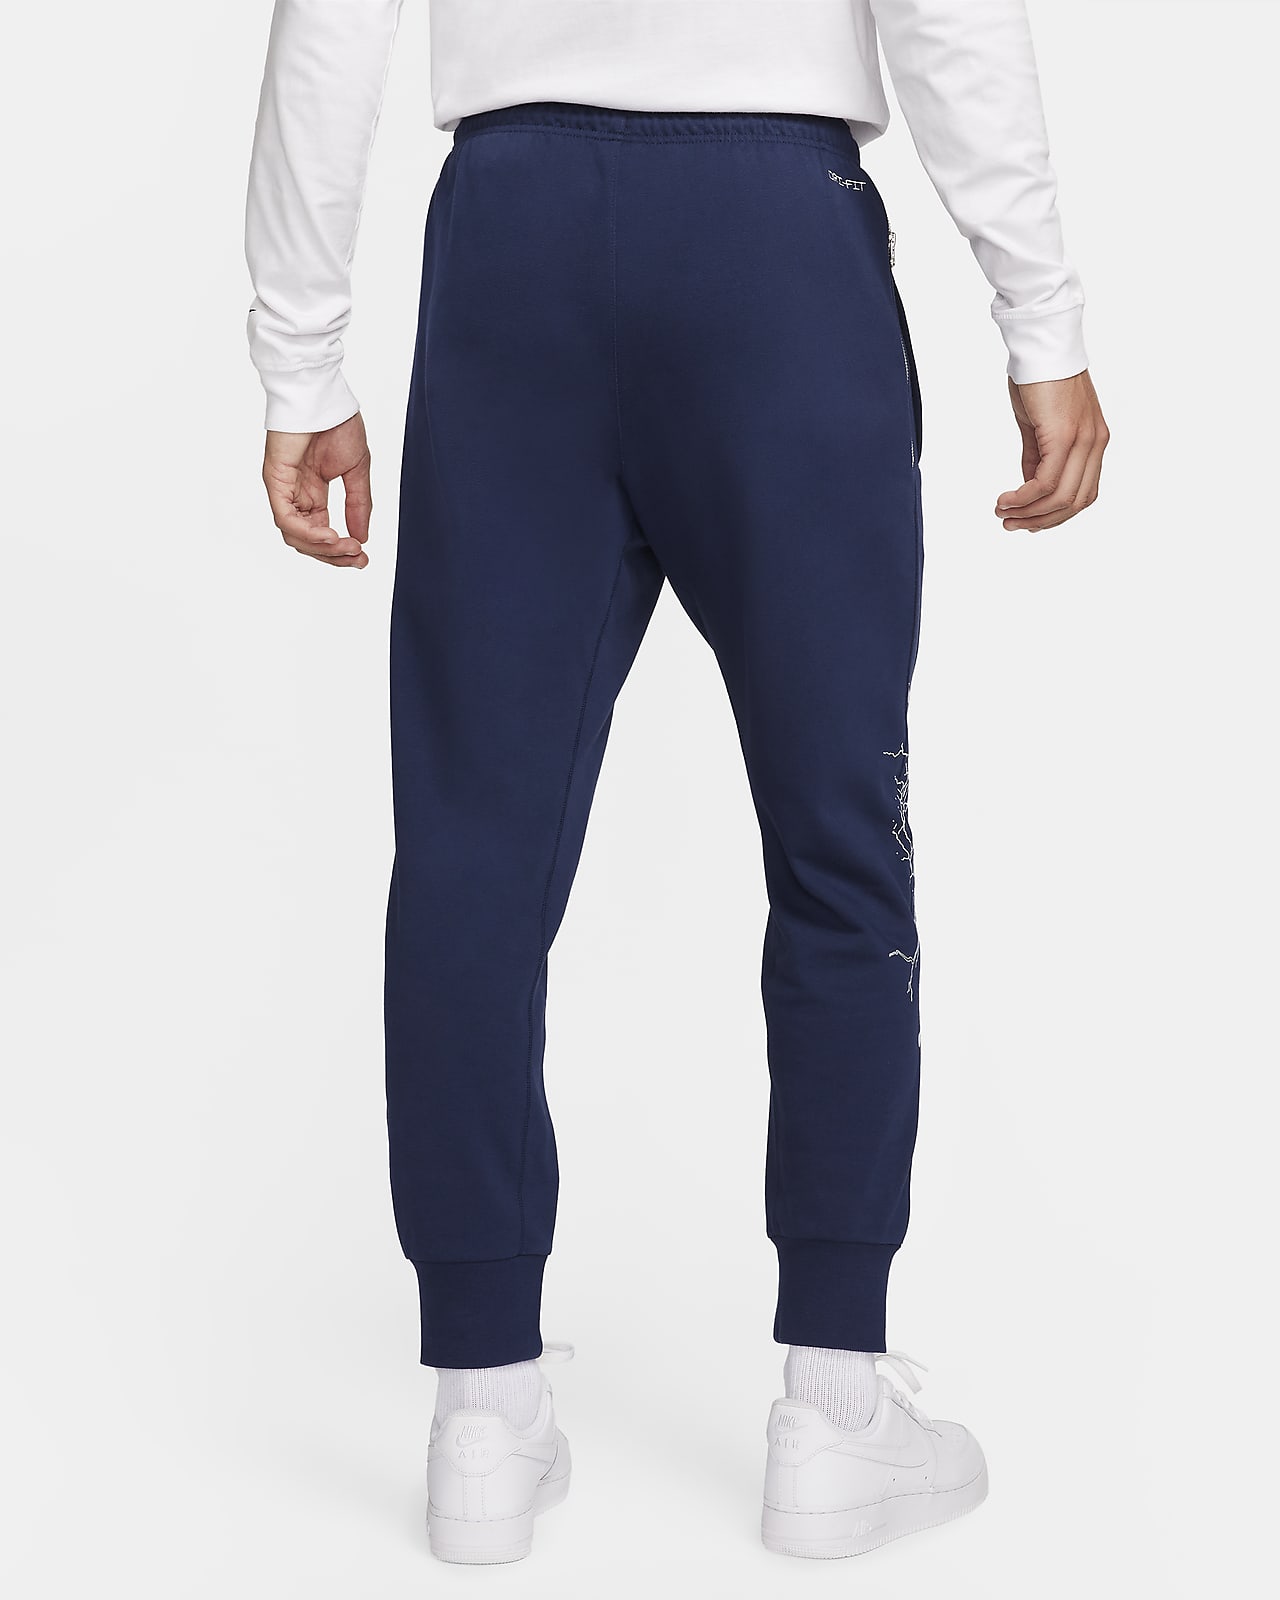 Sweatpants Nike Dri-FIT Standard Issue Basketball Pants CK6365-010